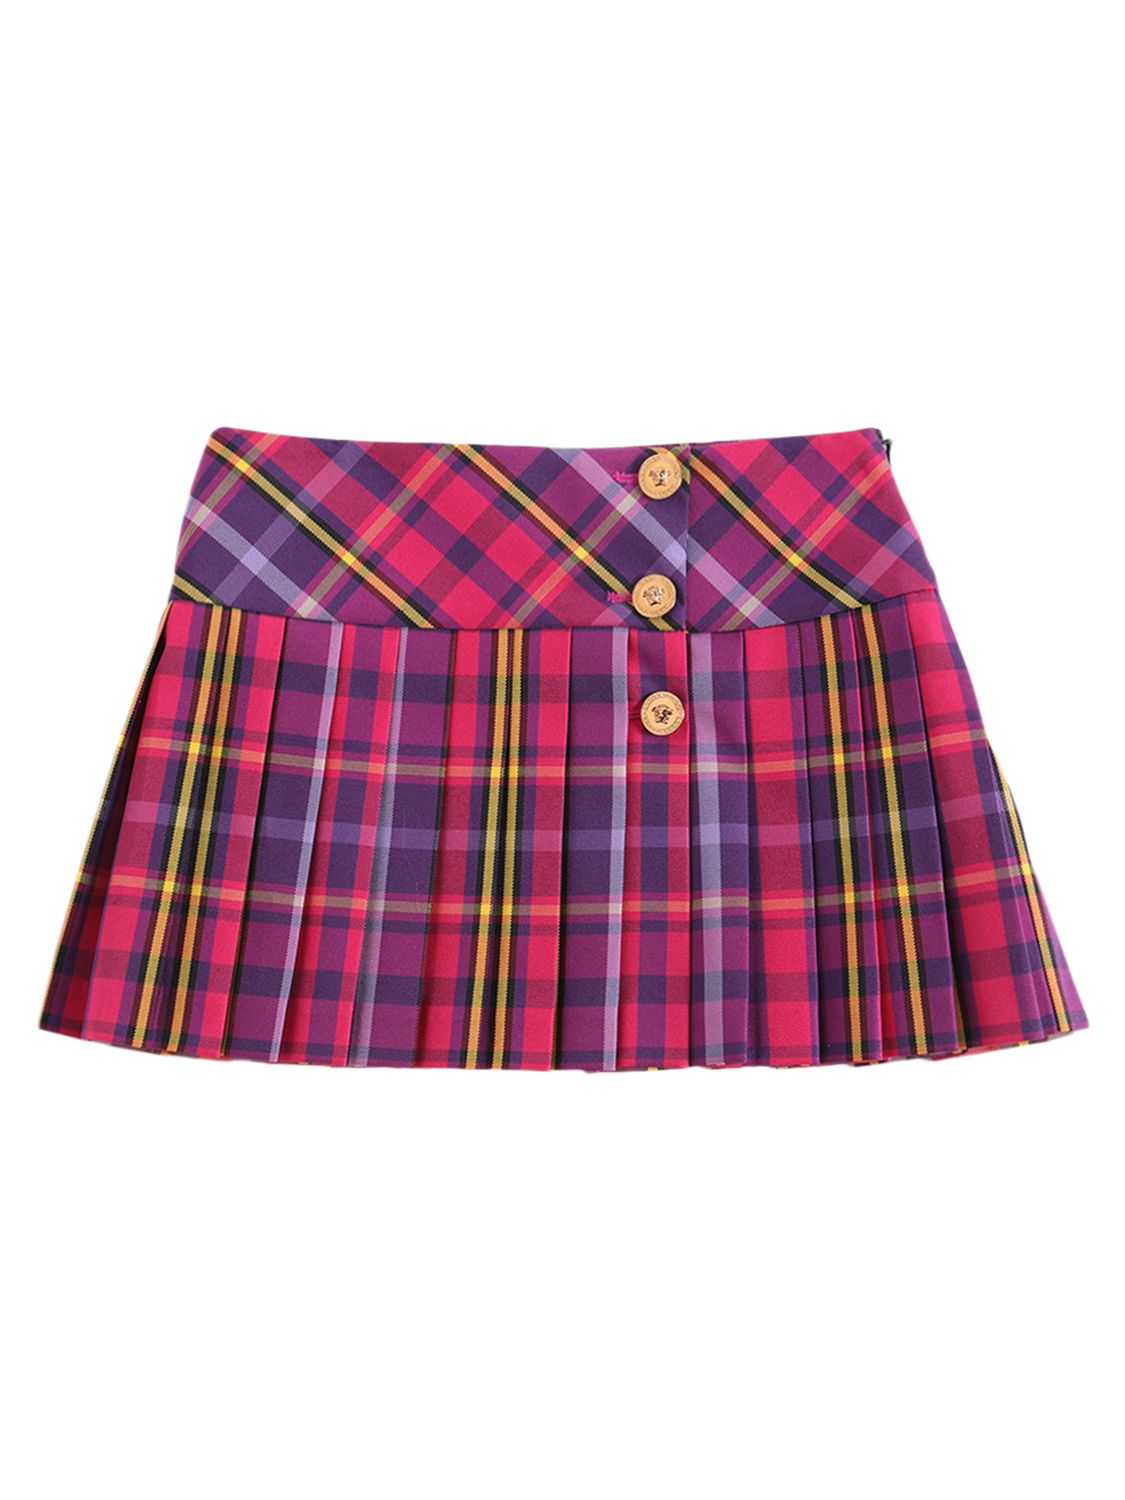 Tartan Print Pleated Flannel Skirt